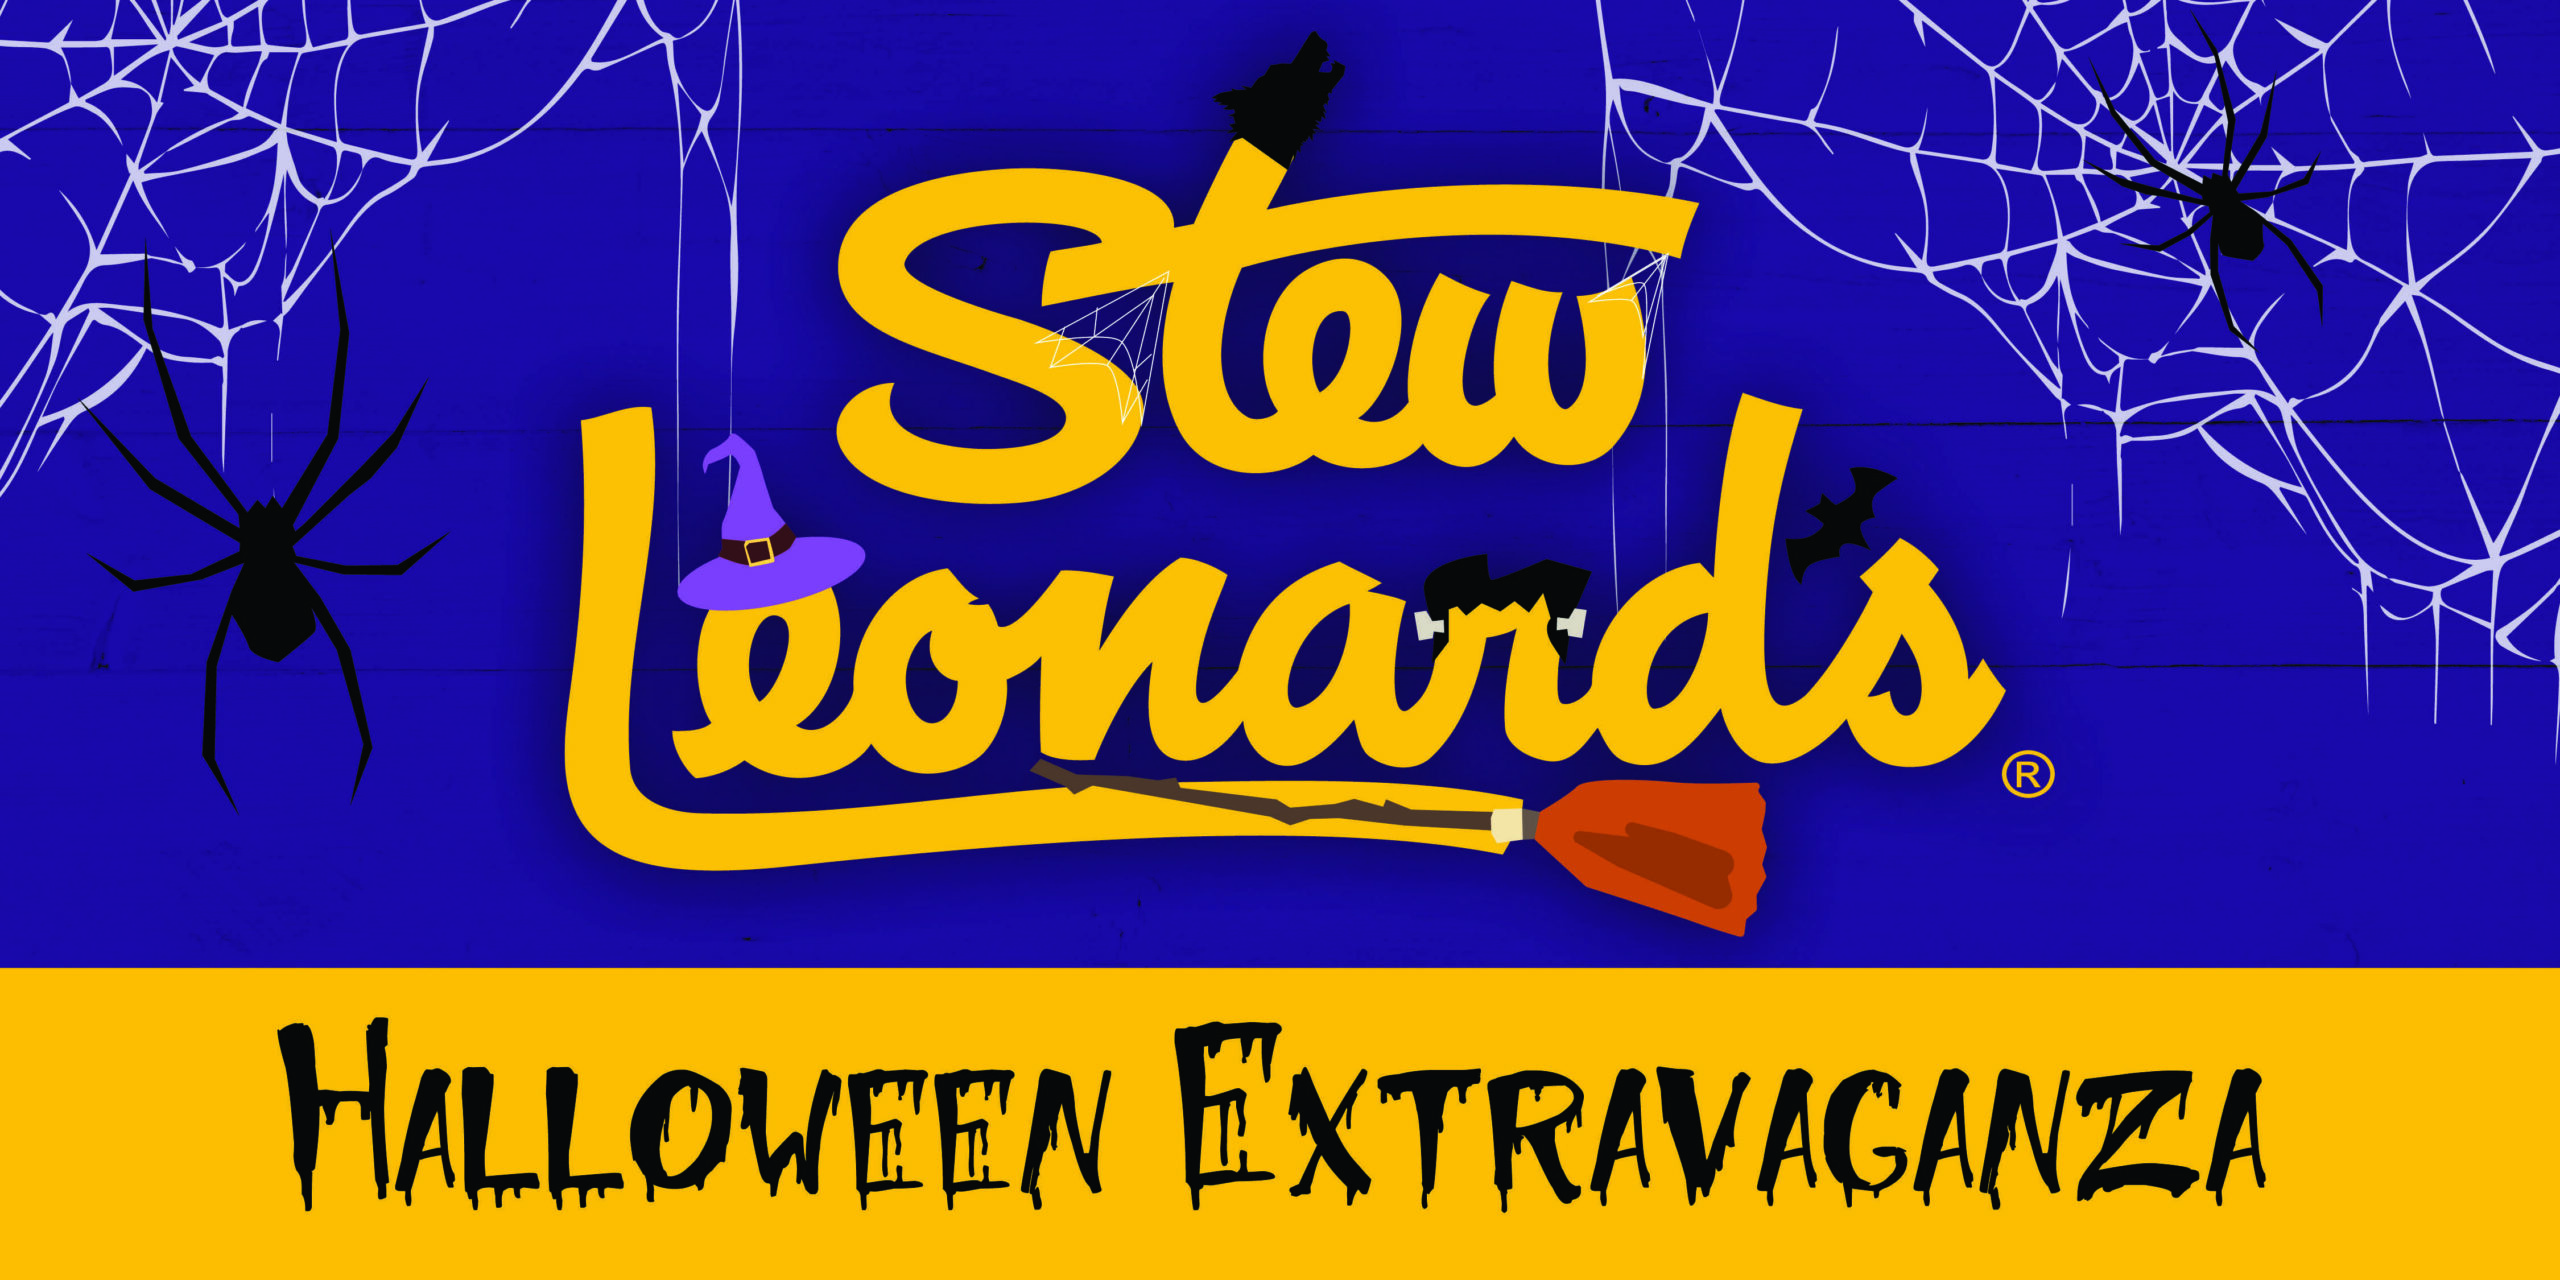 Halloween Extravaganza Weekend at Stew Leonard’s in Newington